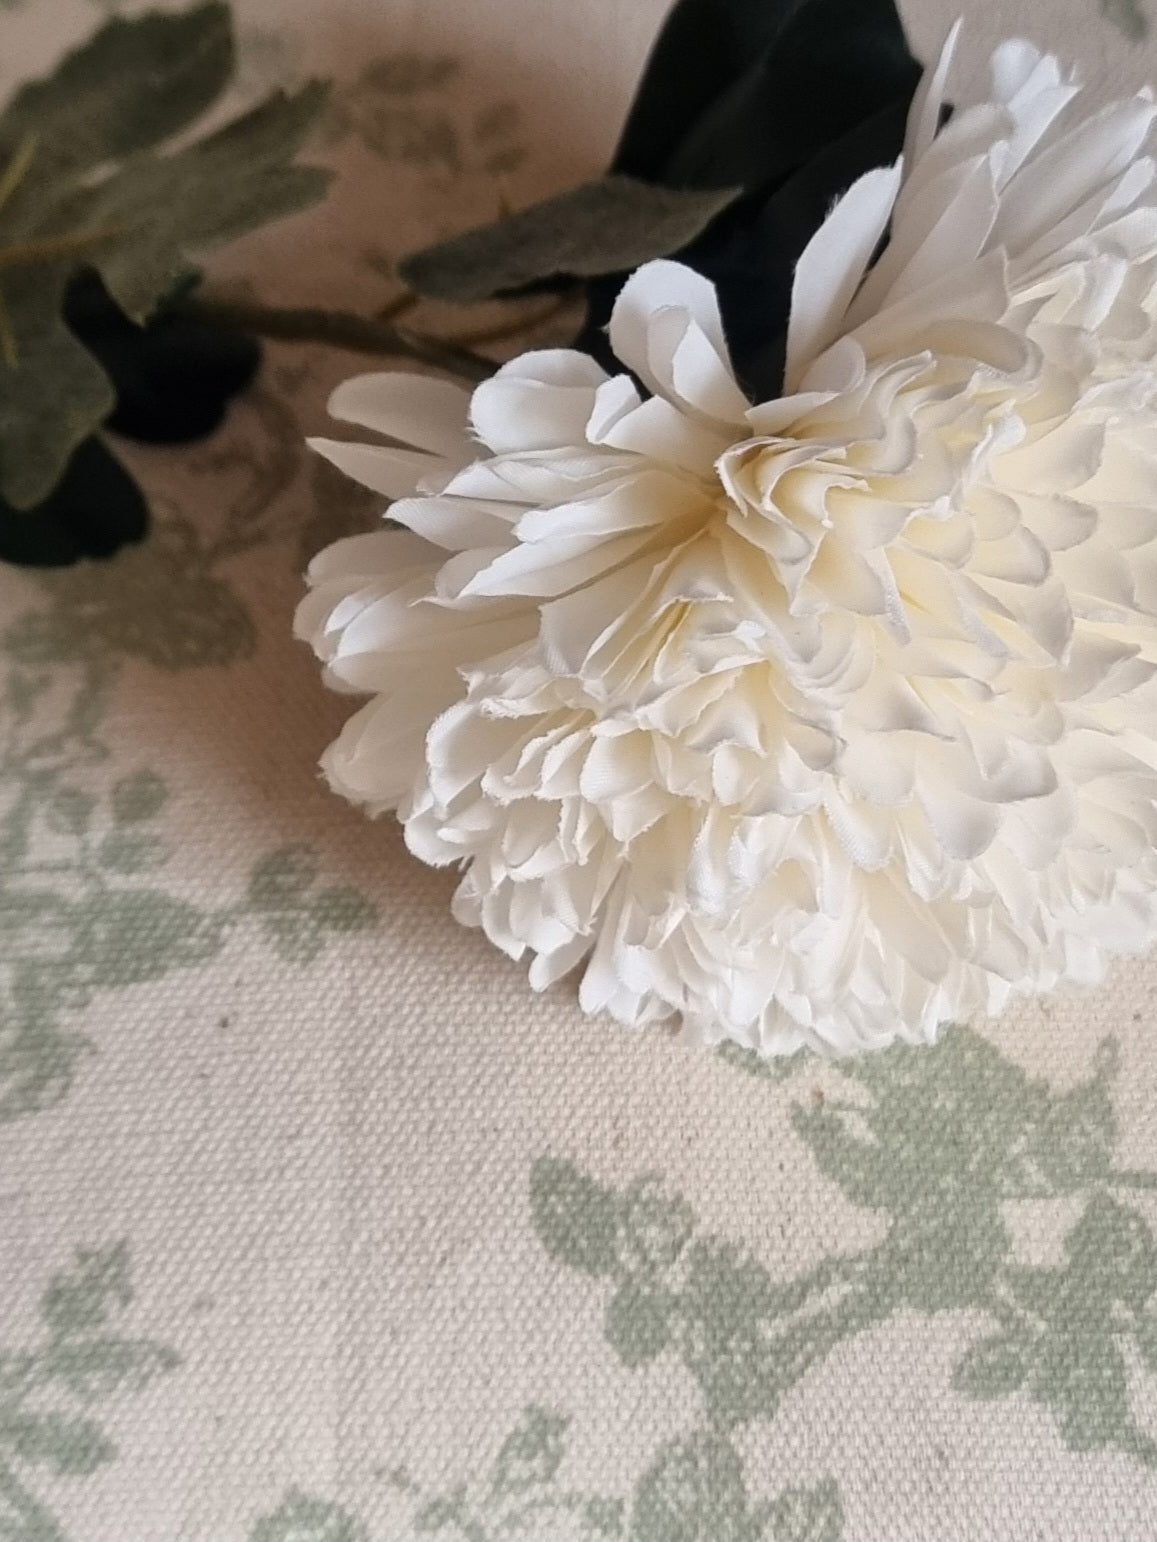 White Short Chrysanthemum